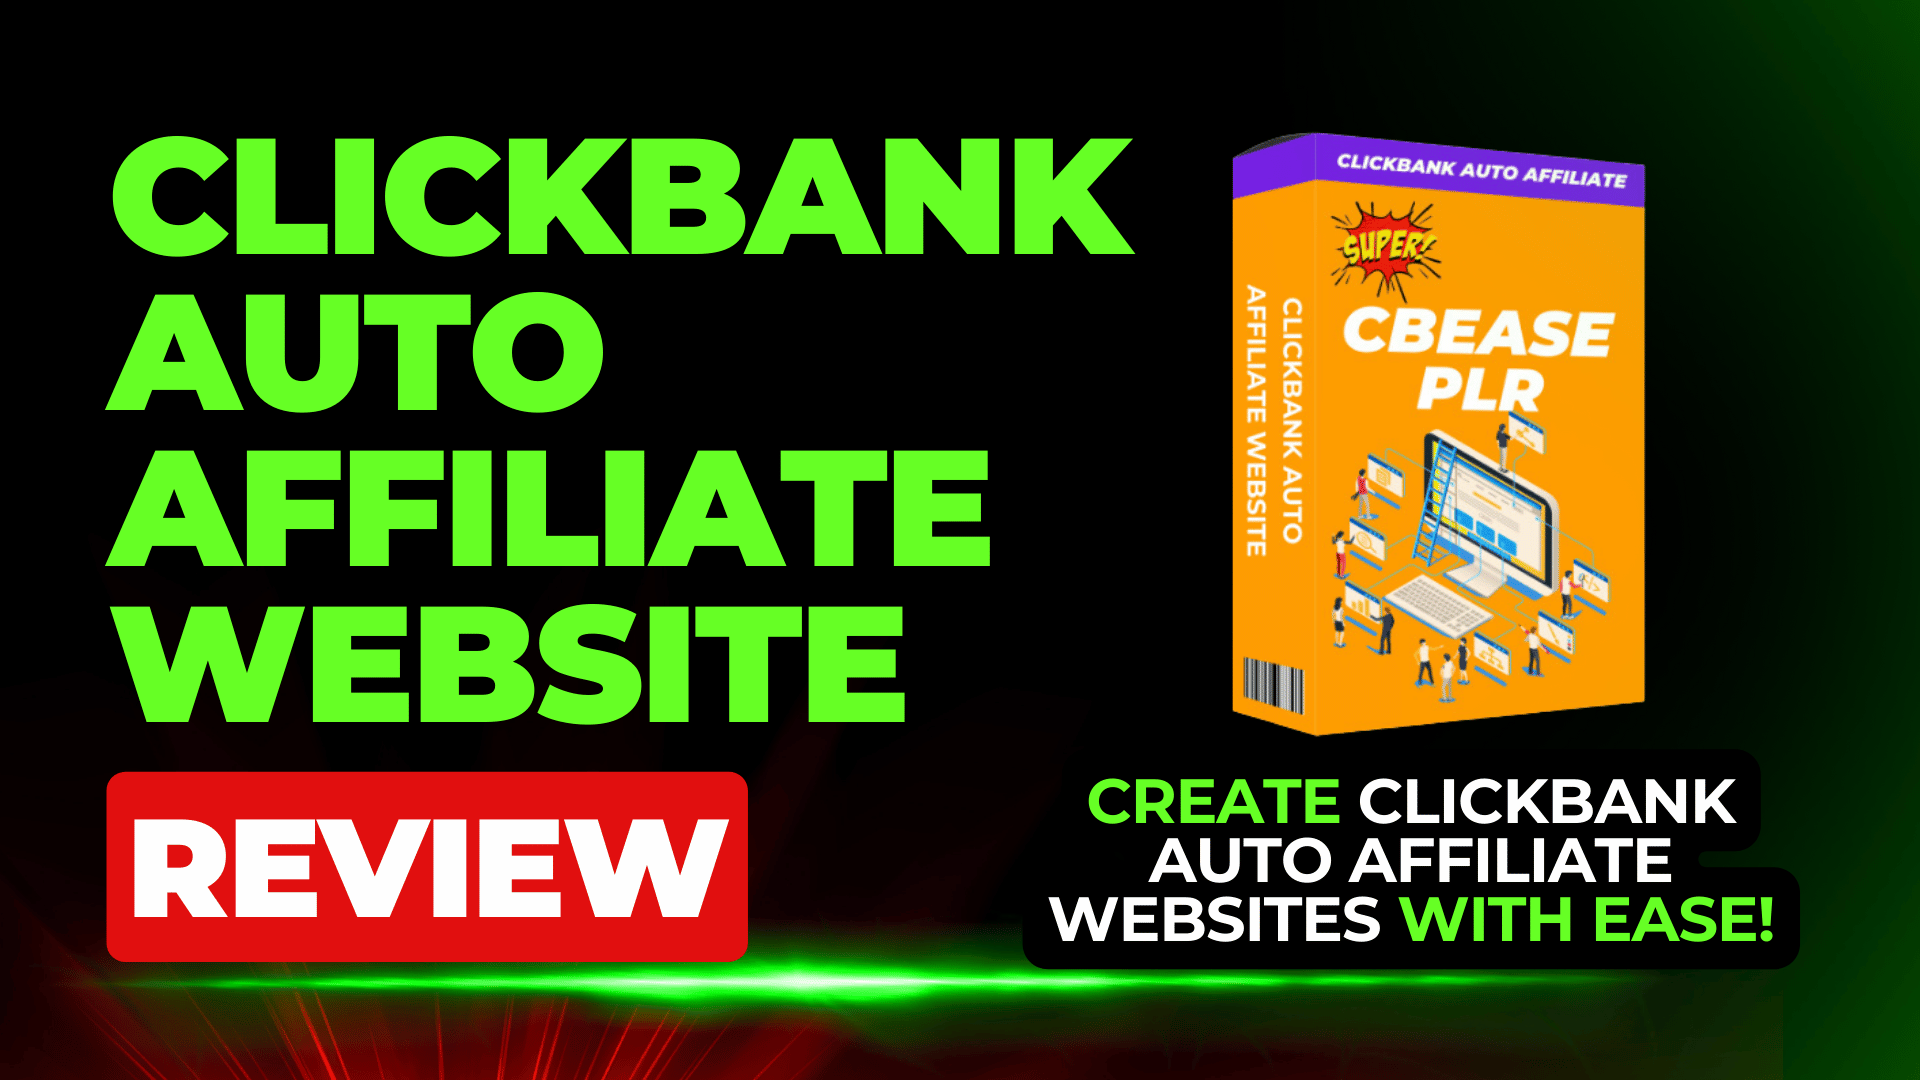 ClickBank Auto Affiliate Website Review